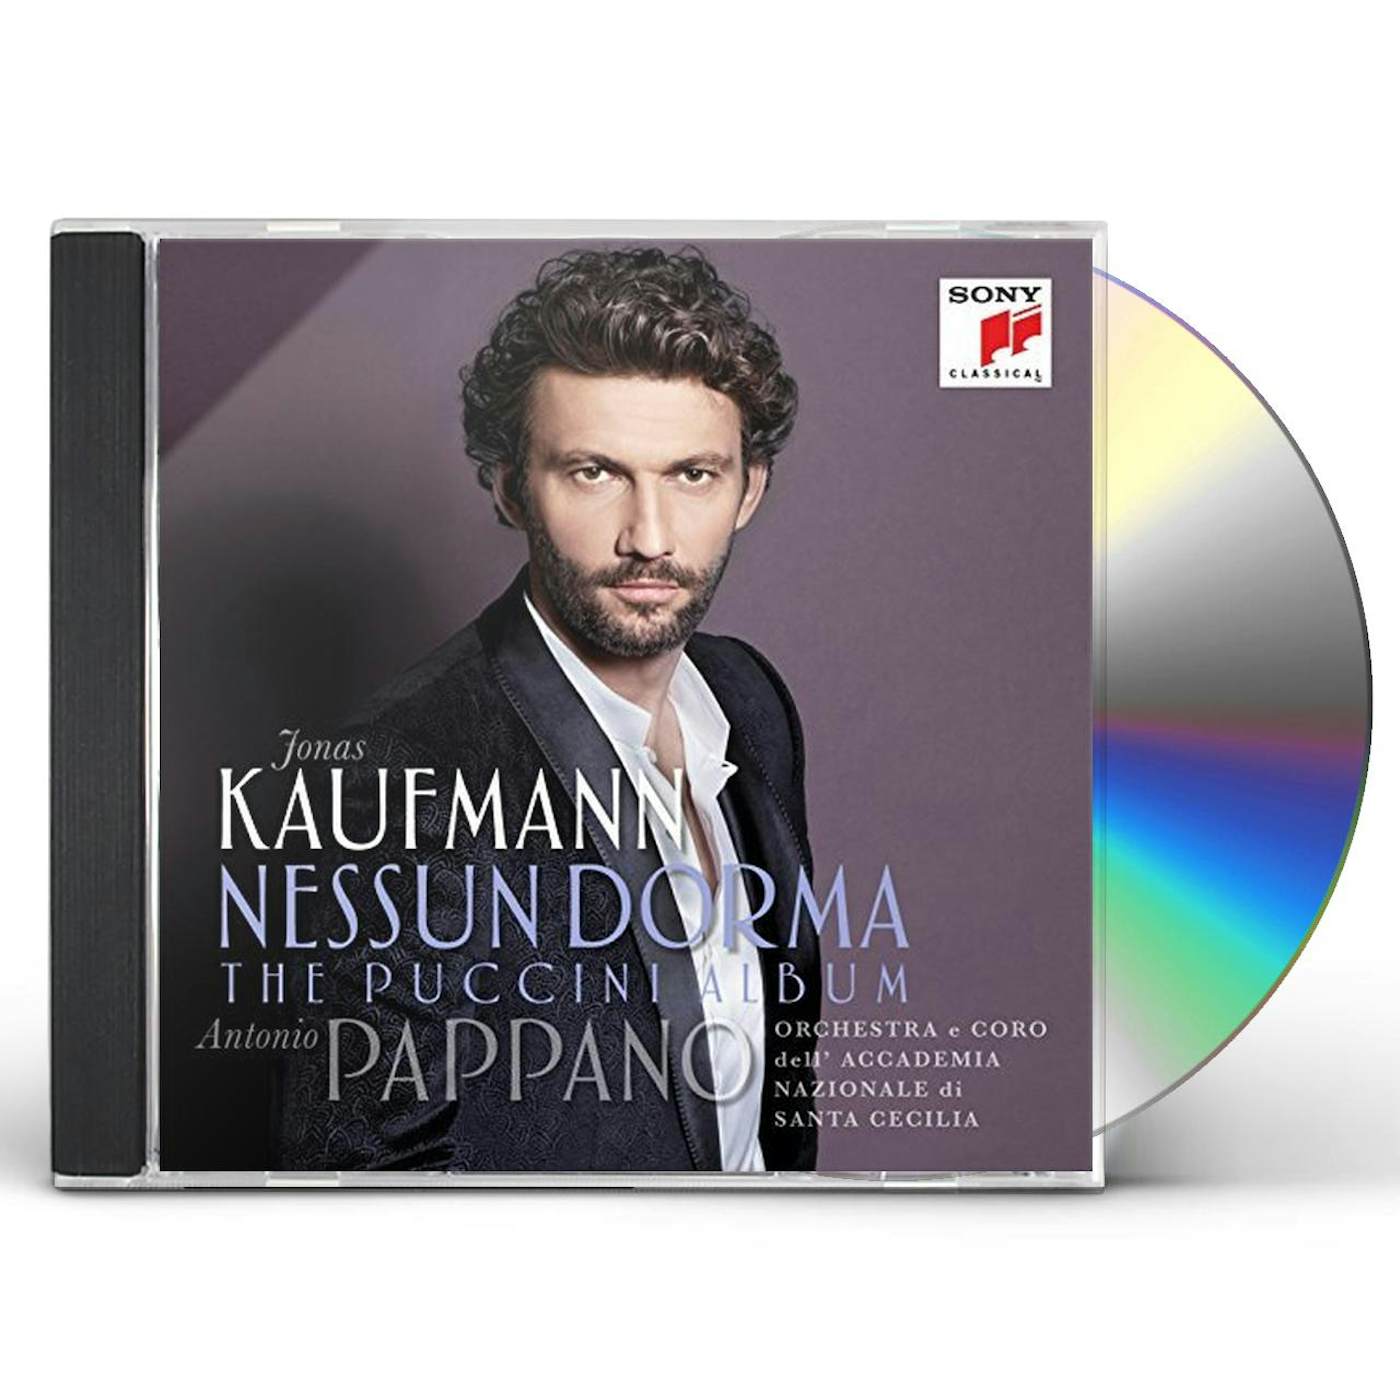 Jonas Kaufmann NESSUN DORMA: PUCCINI ALBUM CD